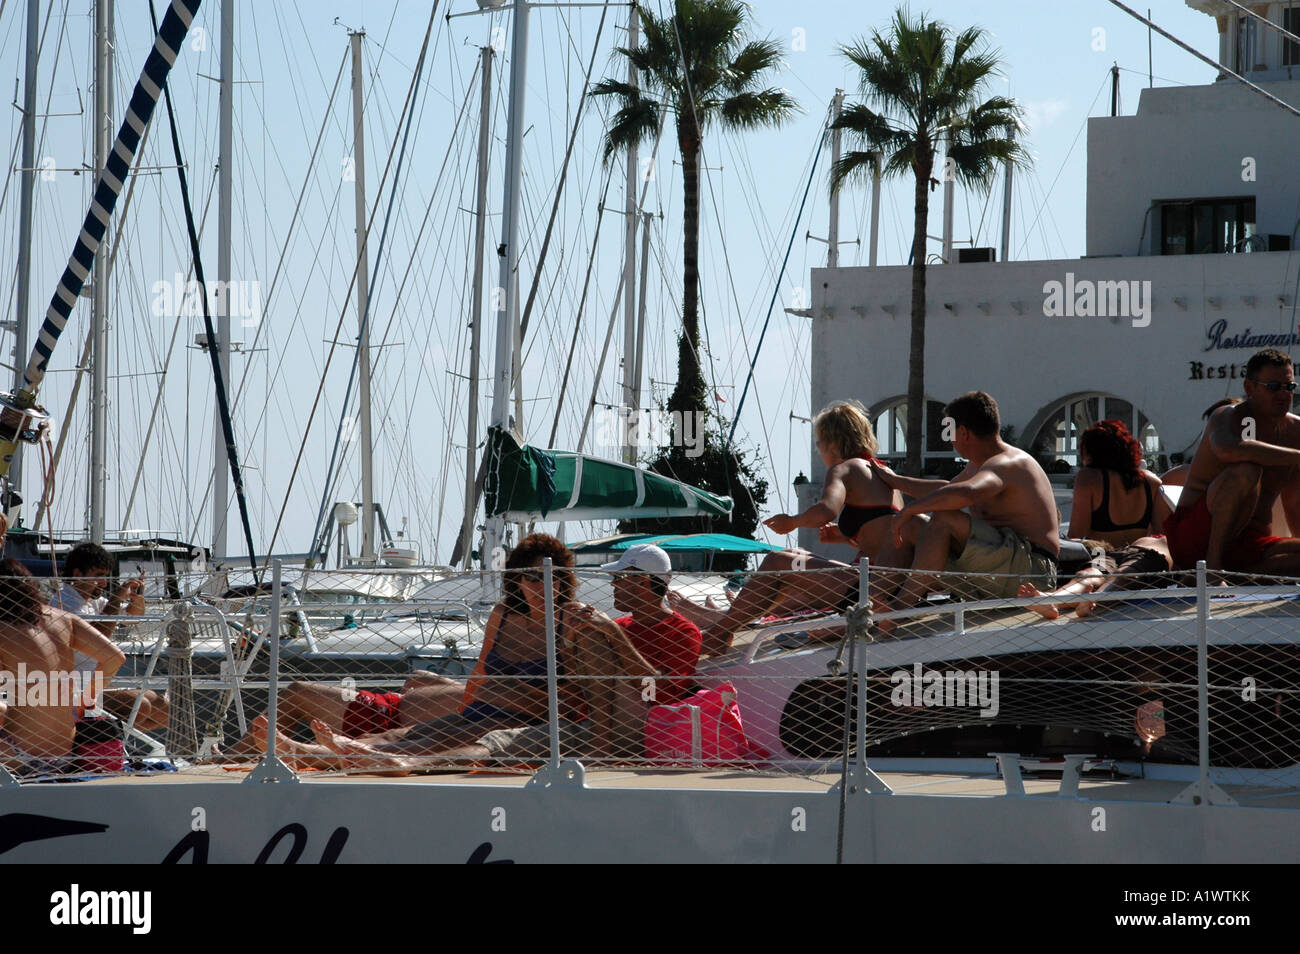 Tourists sunbathing on catamaran pleasure boat in Port El Kantaoui marina in Tunisia Stock Photo